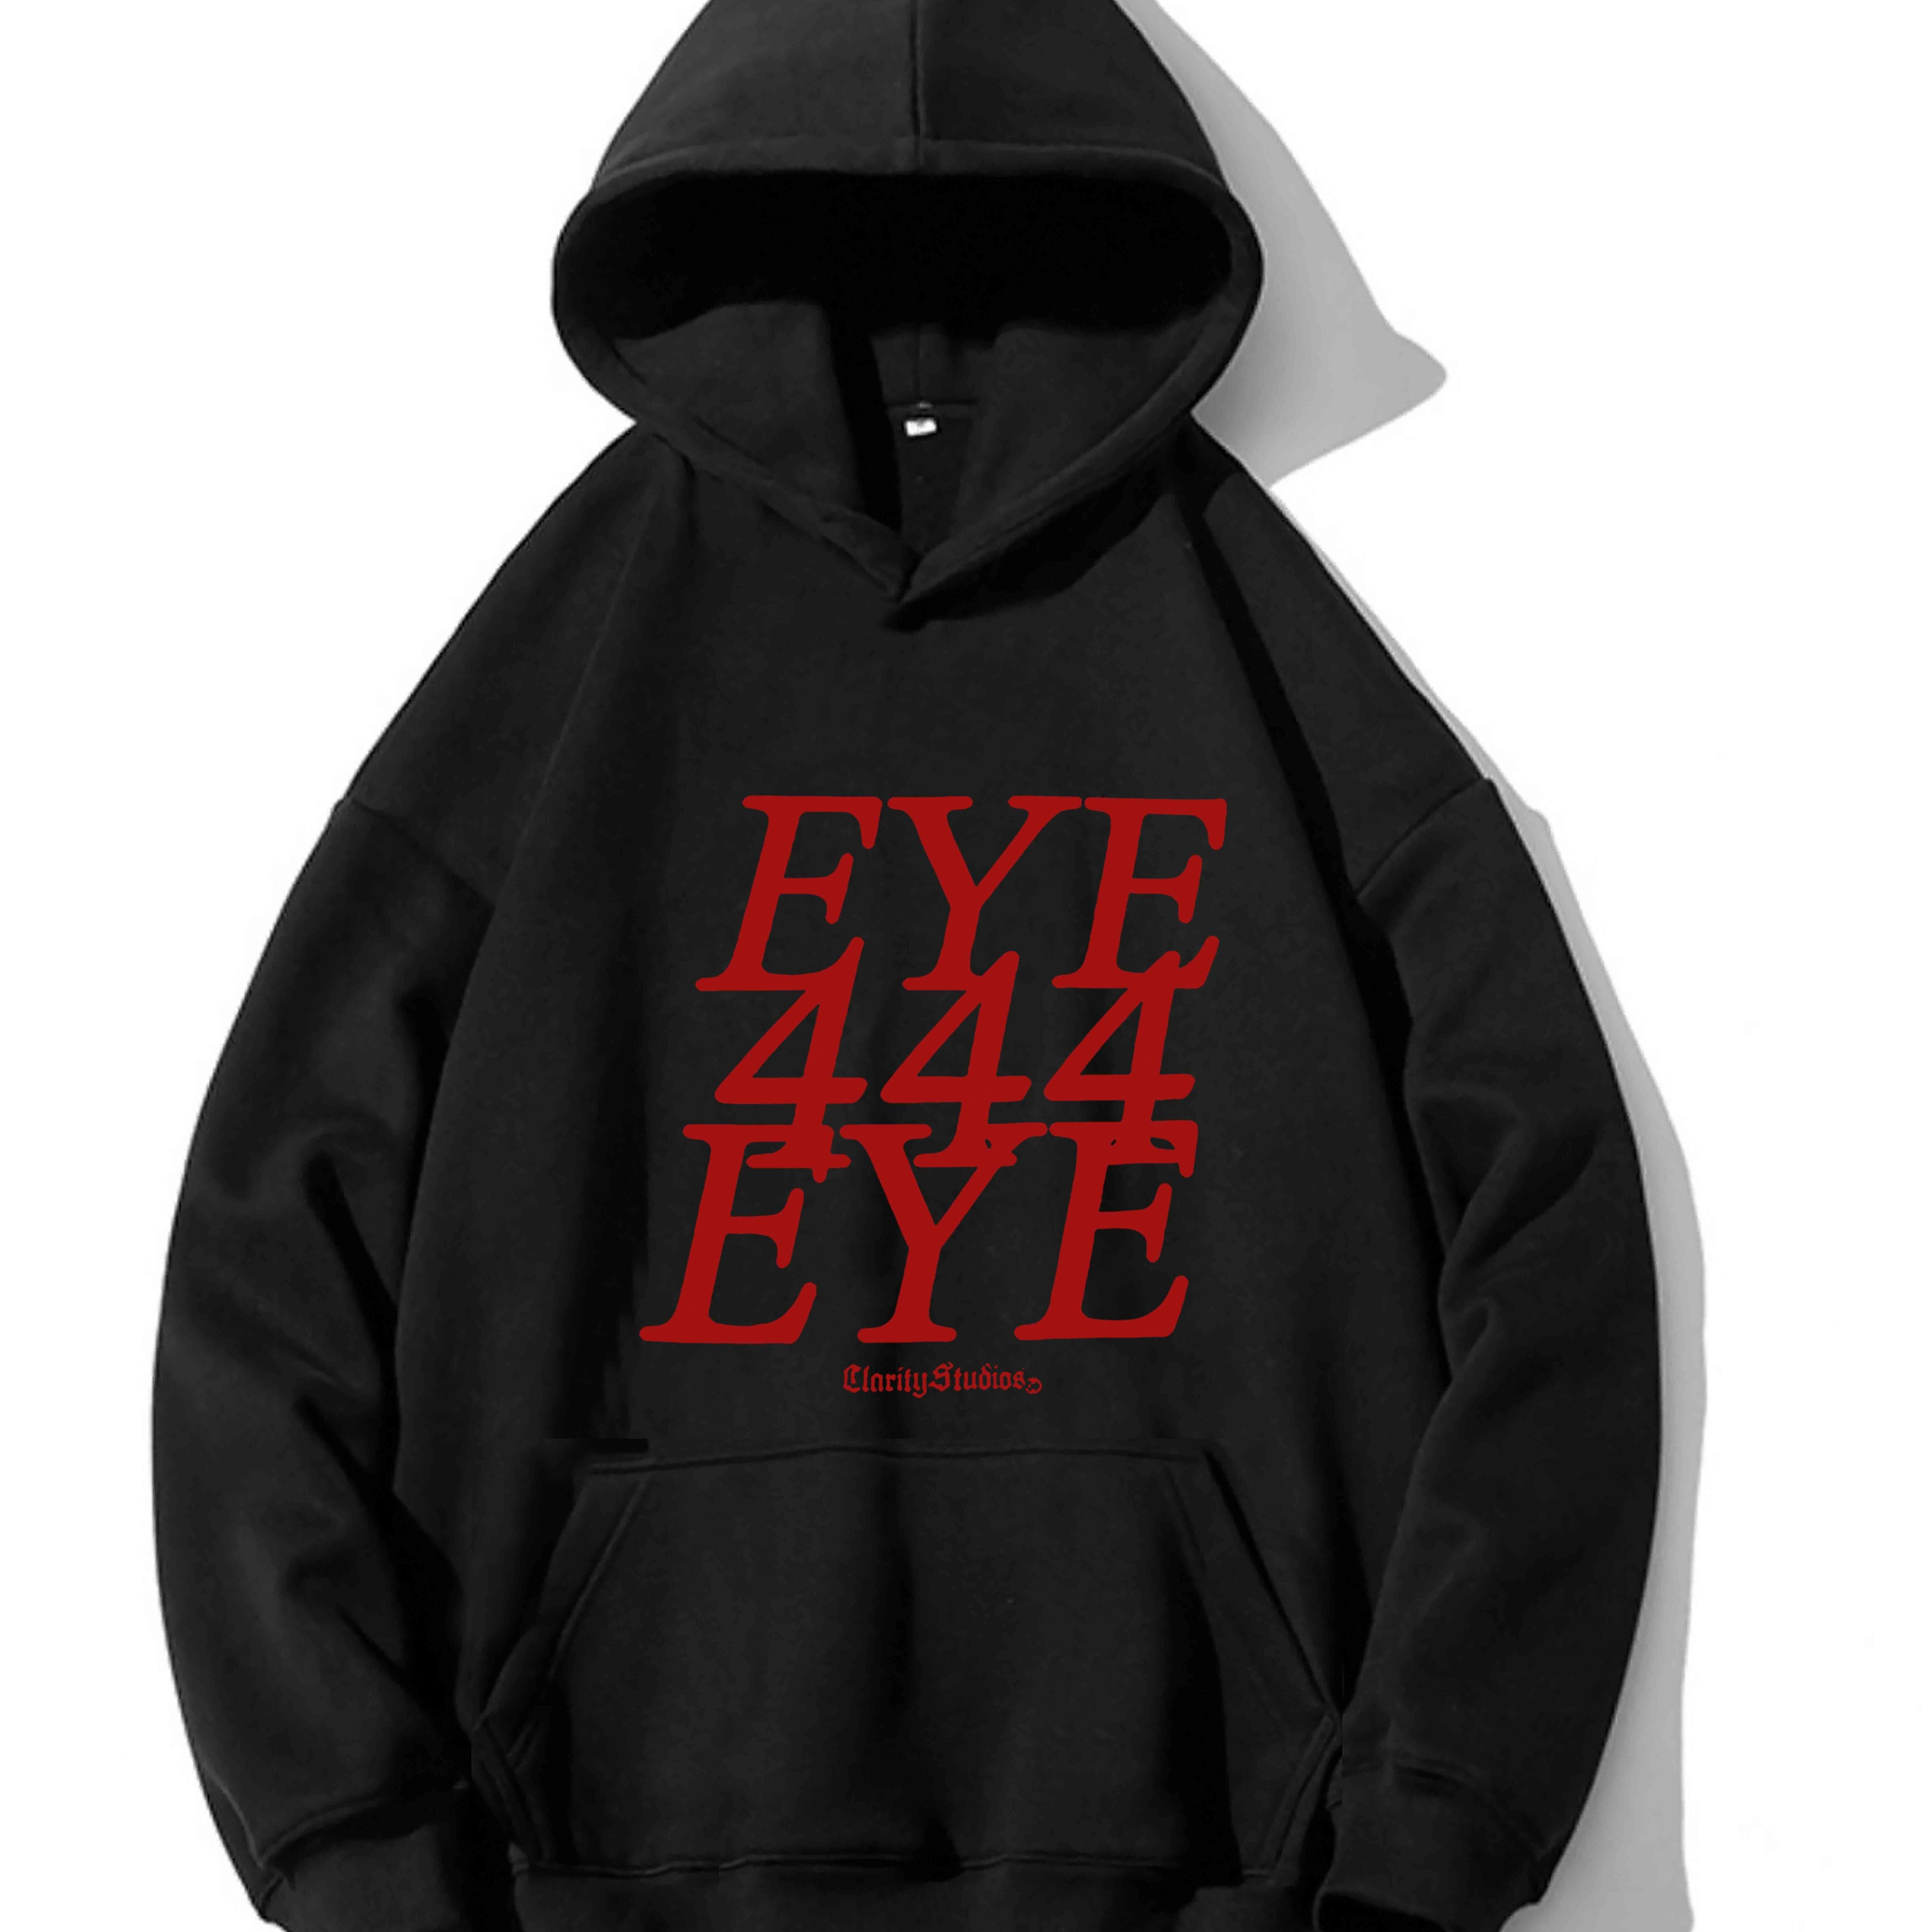 

Eye 4 Eye Print Hoodie, Hoodies For Men, Men's Casual Graphic Design Pullover Hooded Sweatshirt With Kangaroo Pocket For Spring Fall, As Gifts